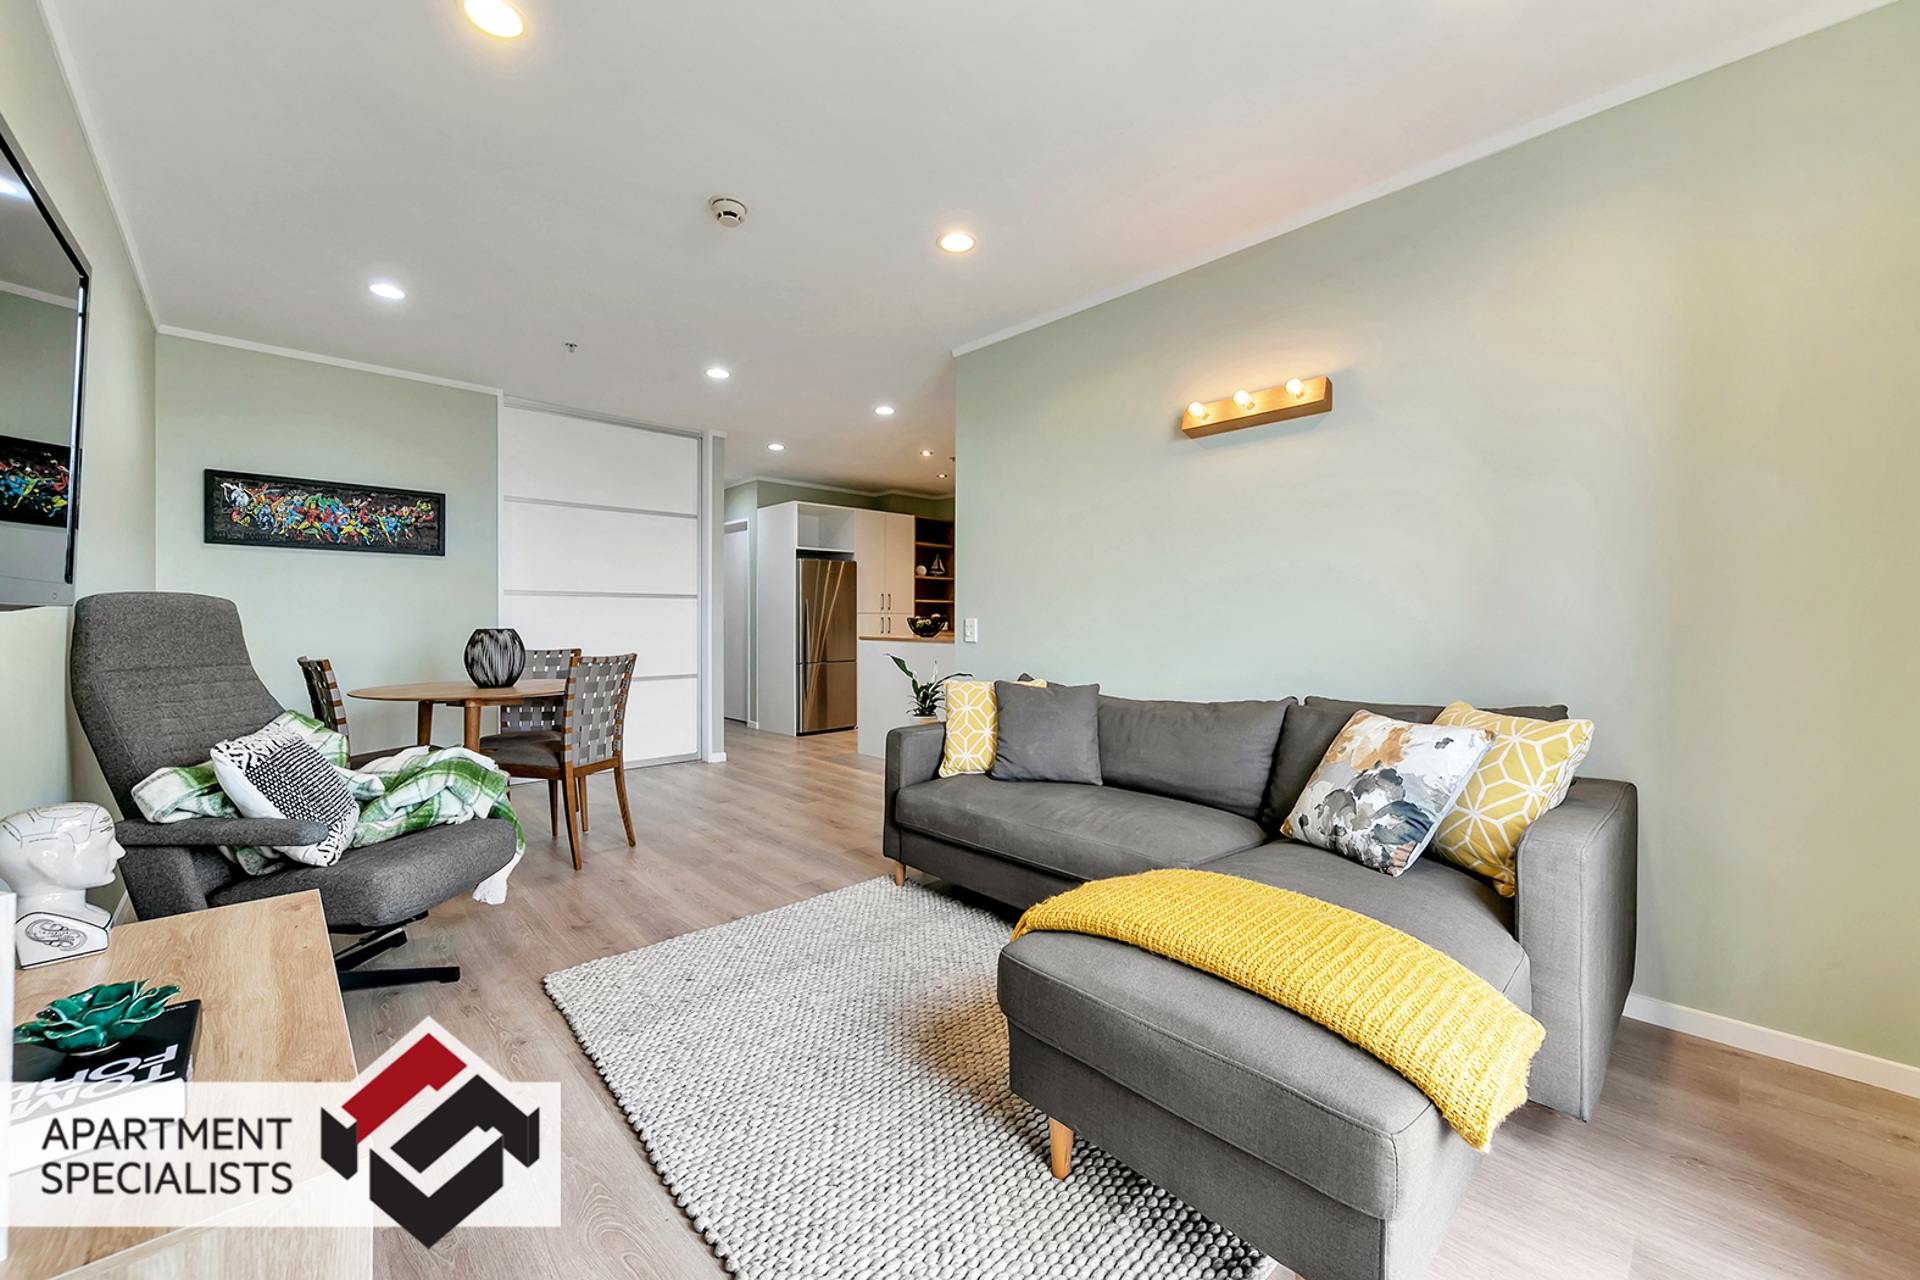 6 | 184 Symonds Street, Eden Terrace | Apartment Specialists